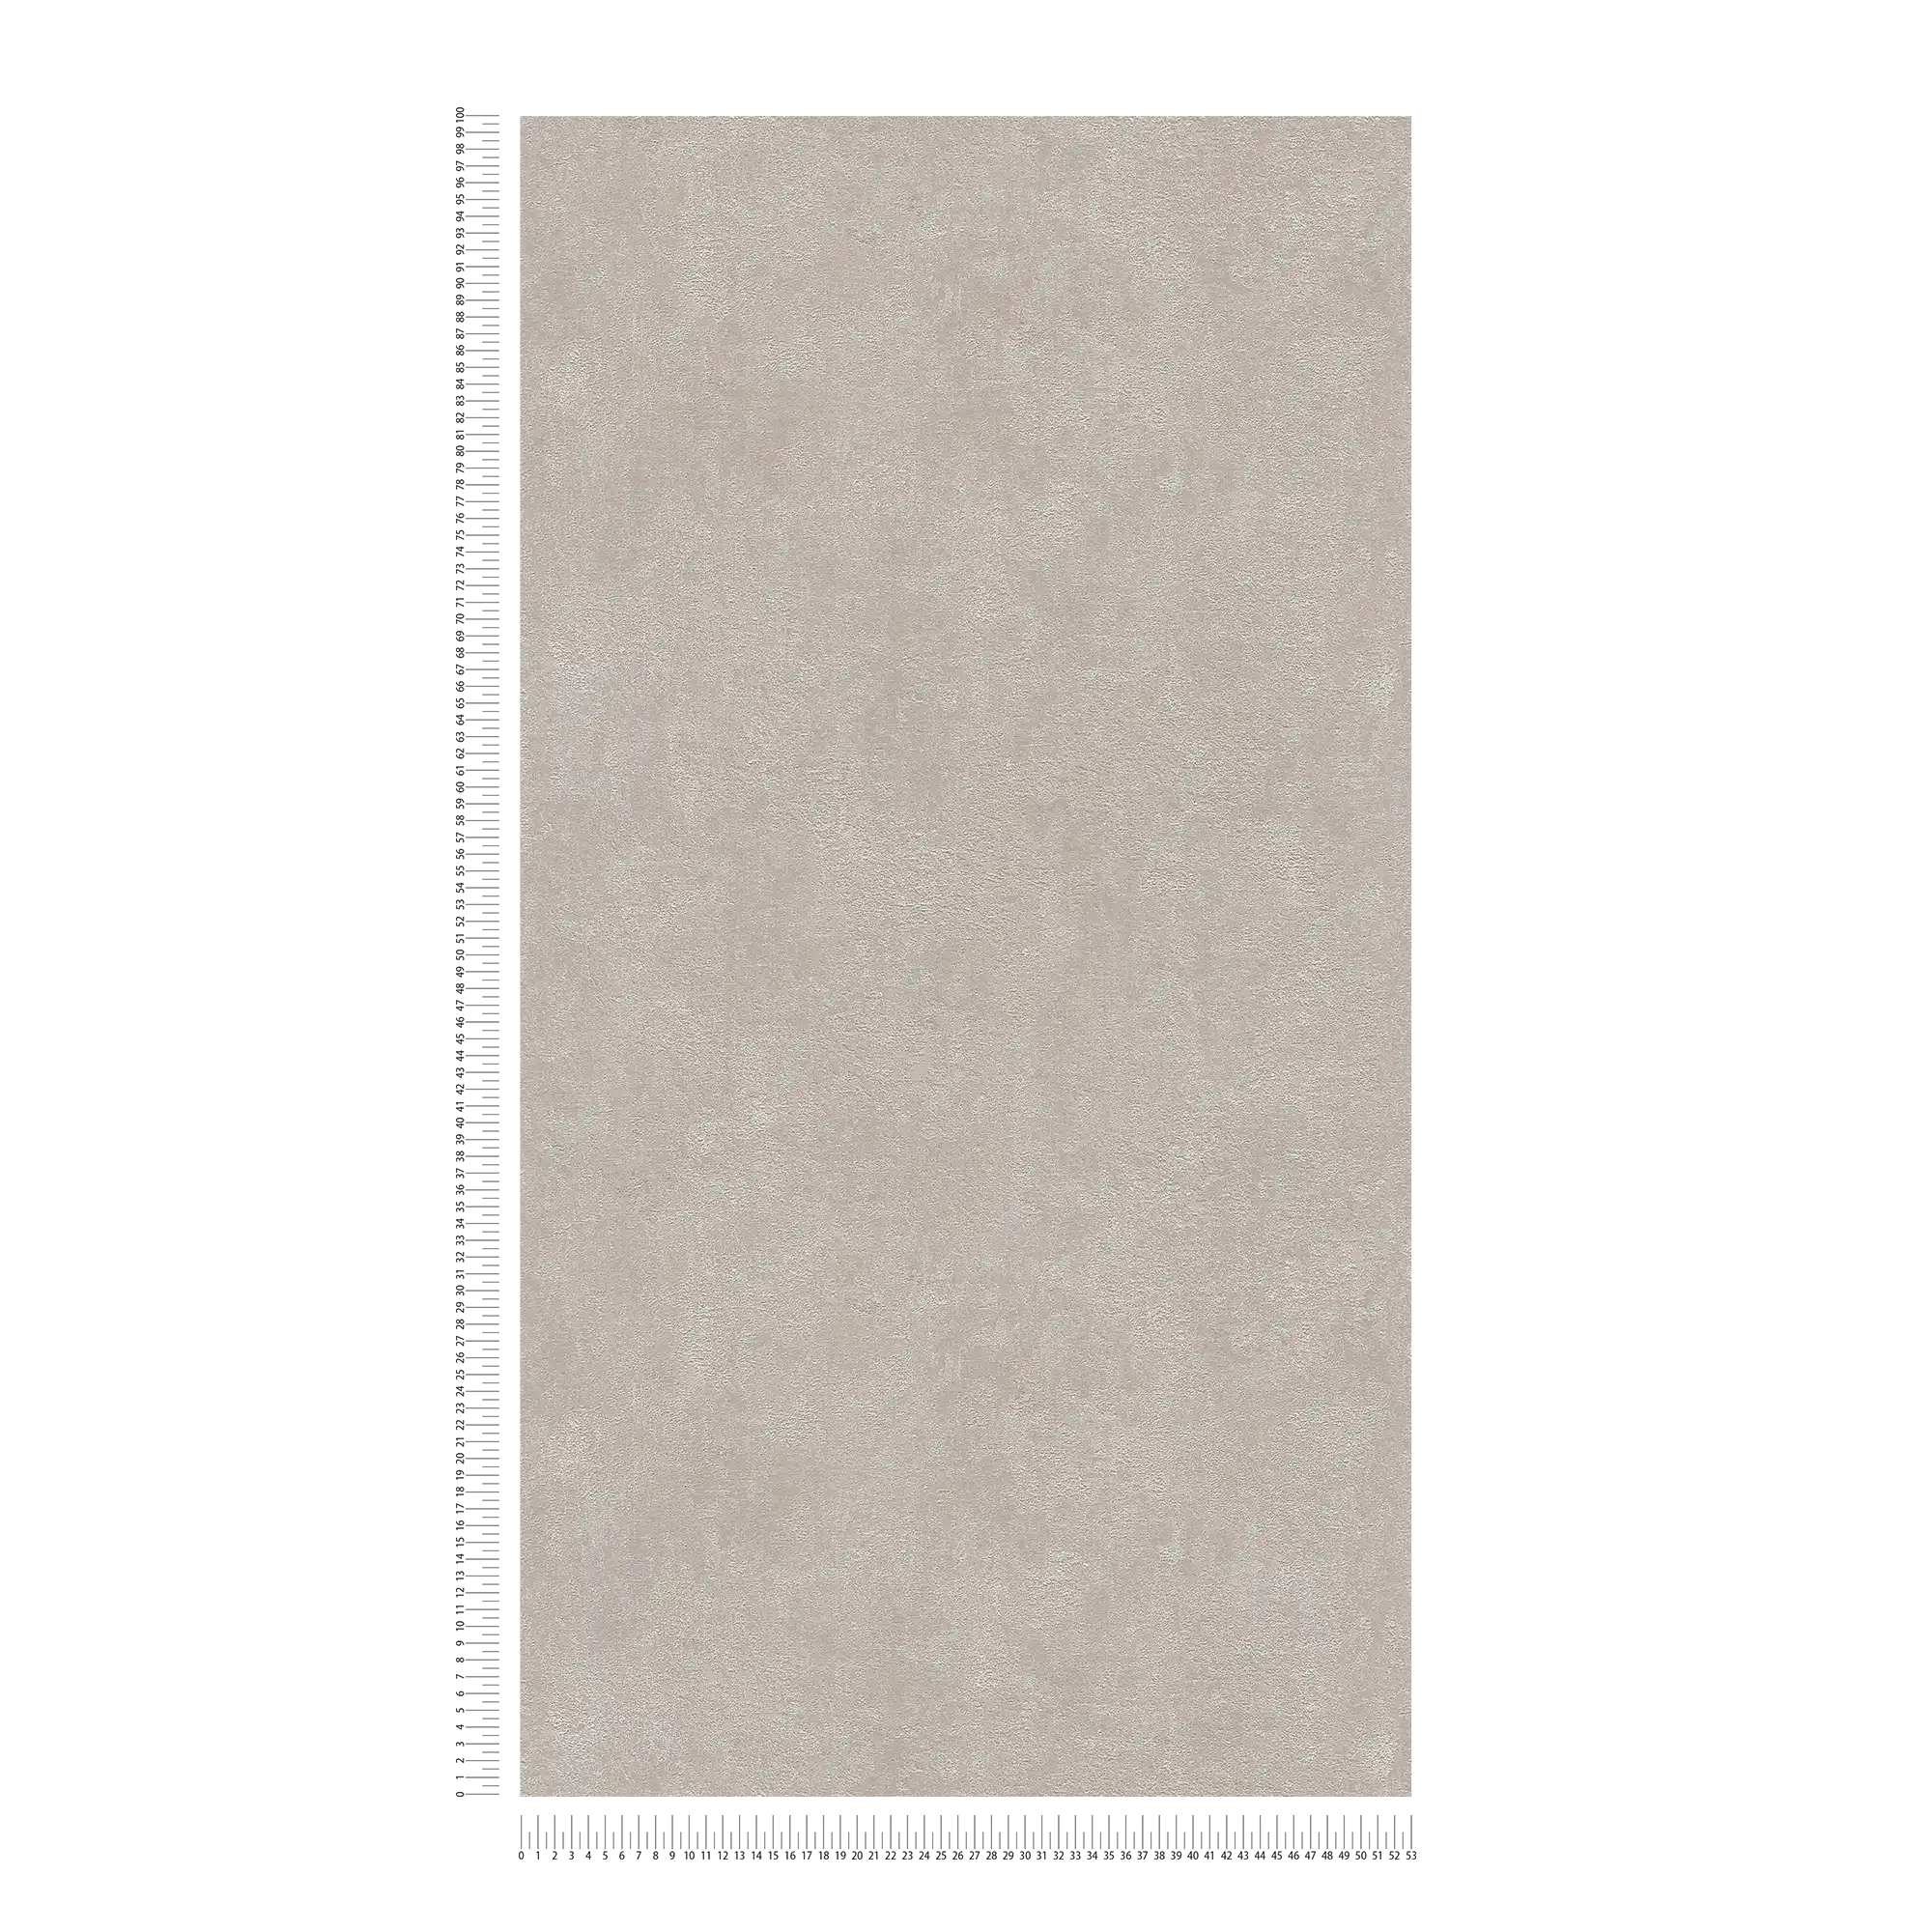             Non-woven wallpaper grey satin texture design in stone look
        